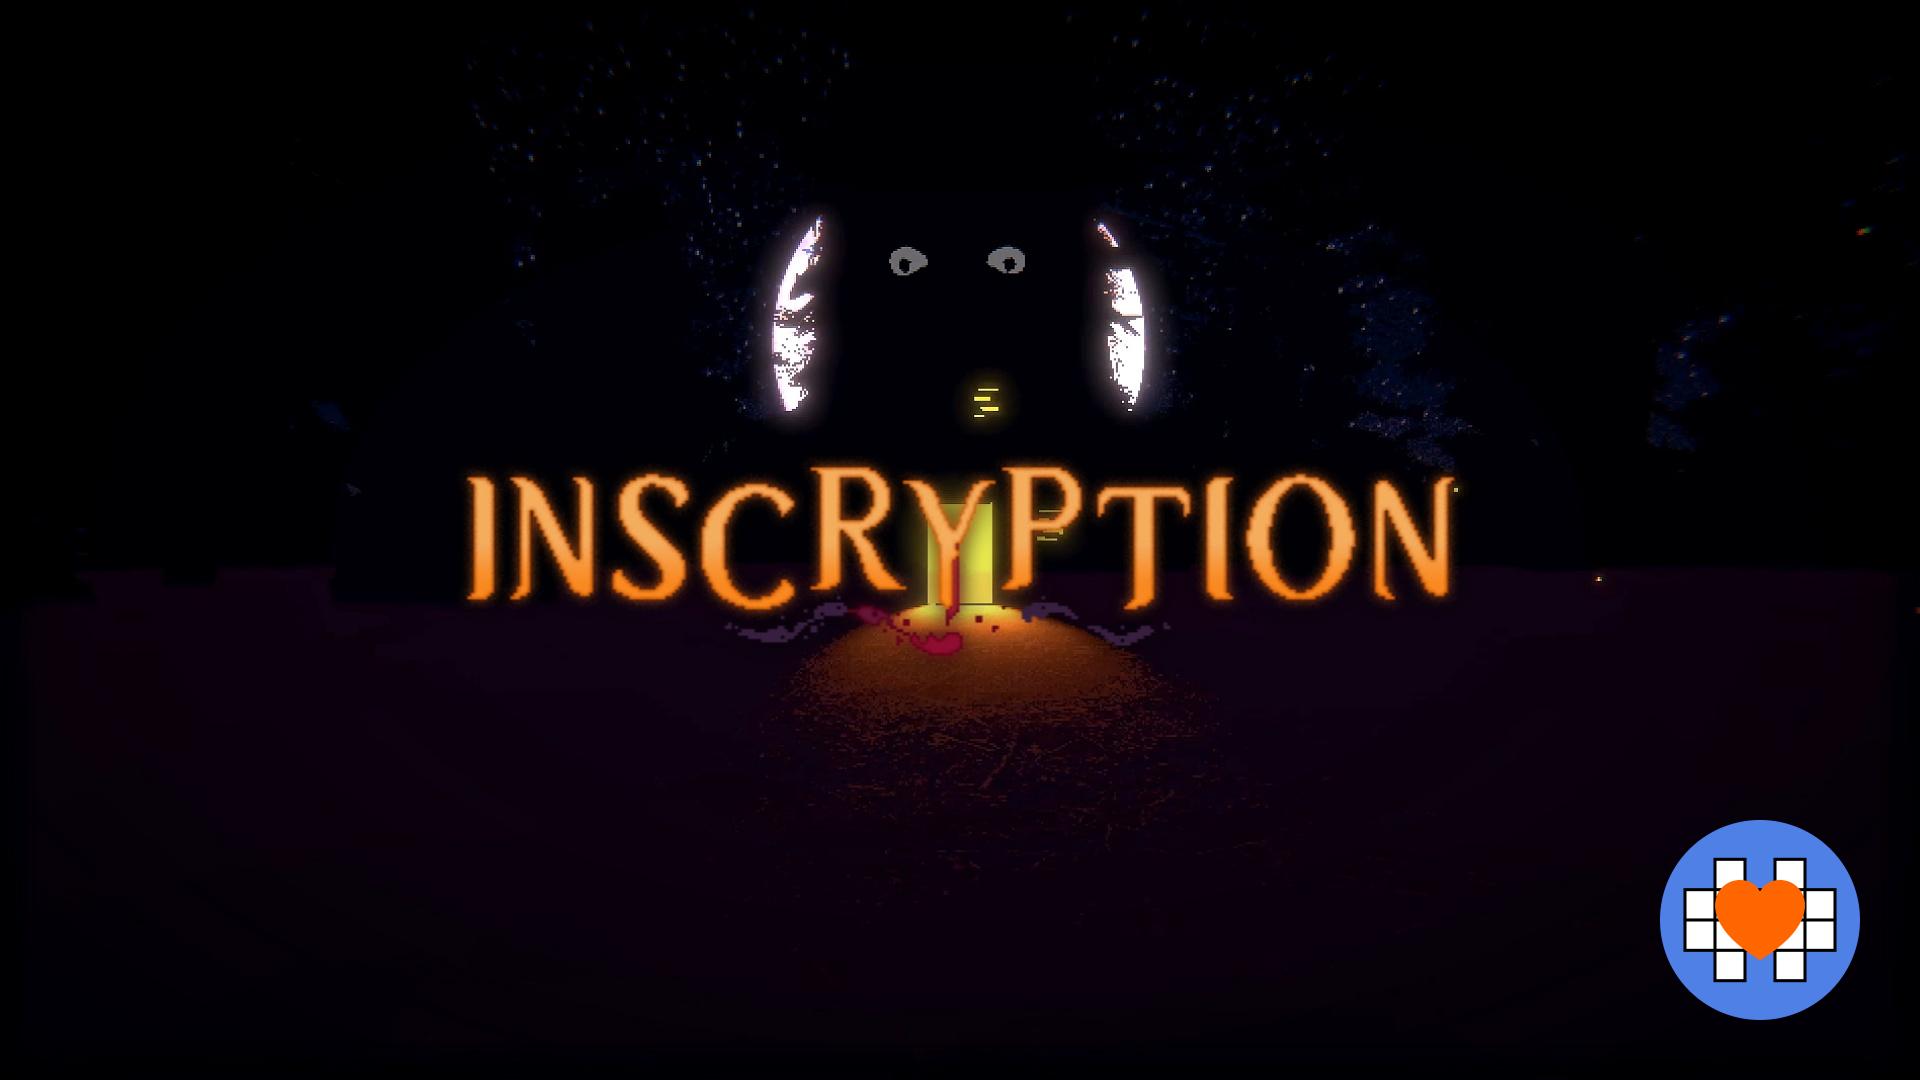 Presenting INSCRYPTION. Originally based on Sacrifices Must Be Made! - Sacrifices  Must Be Made by Daniel Mullins